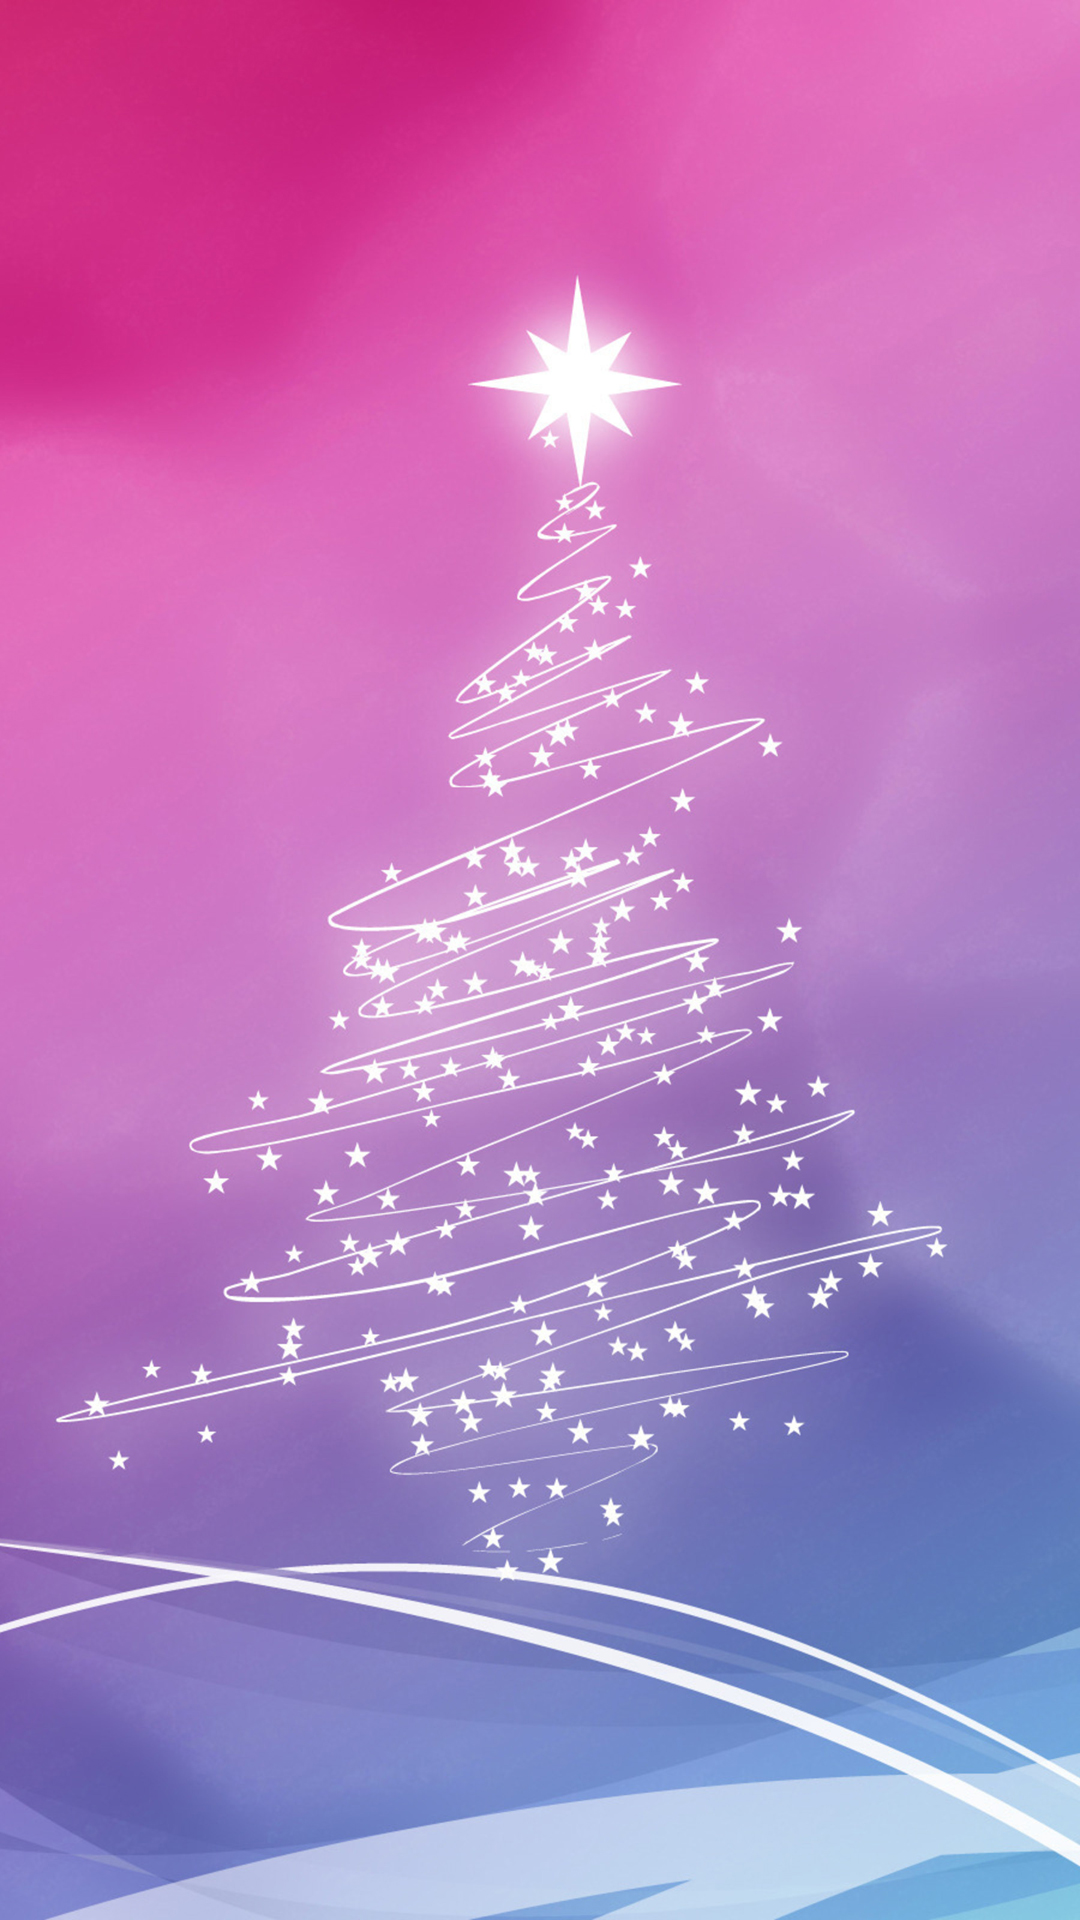 Immagini Natale Iphone 6.Christmas Tree Iphone Wallpaper Hd